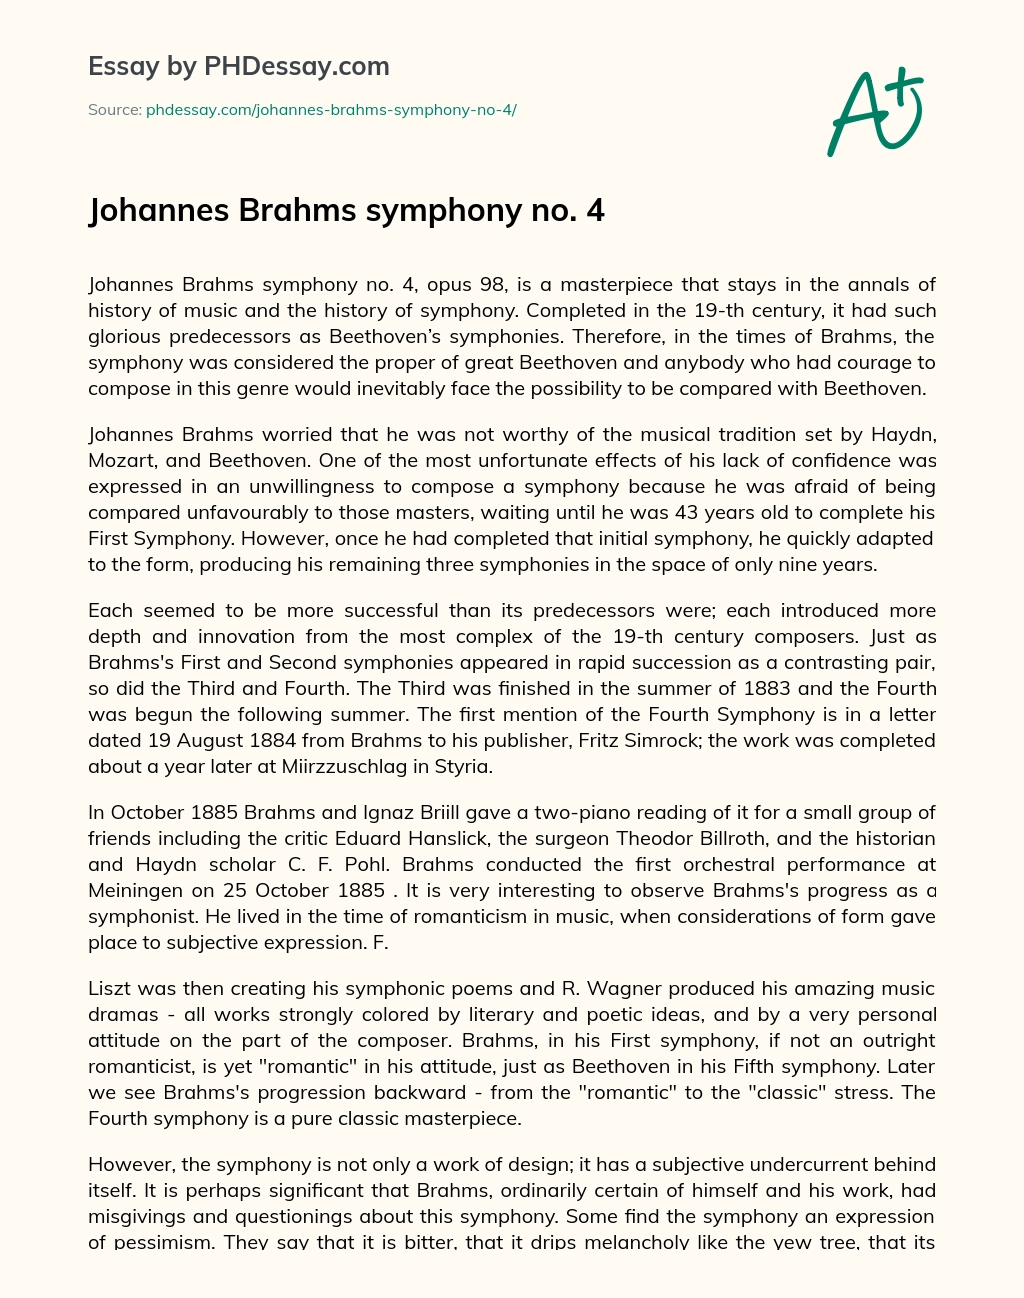 Johannes Brahms symphony no. 4 essay